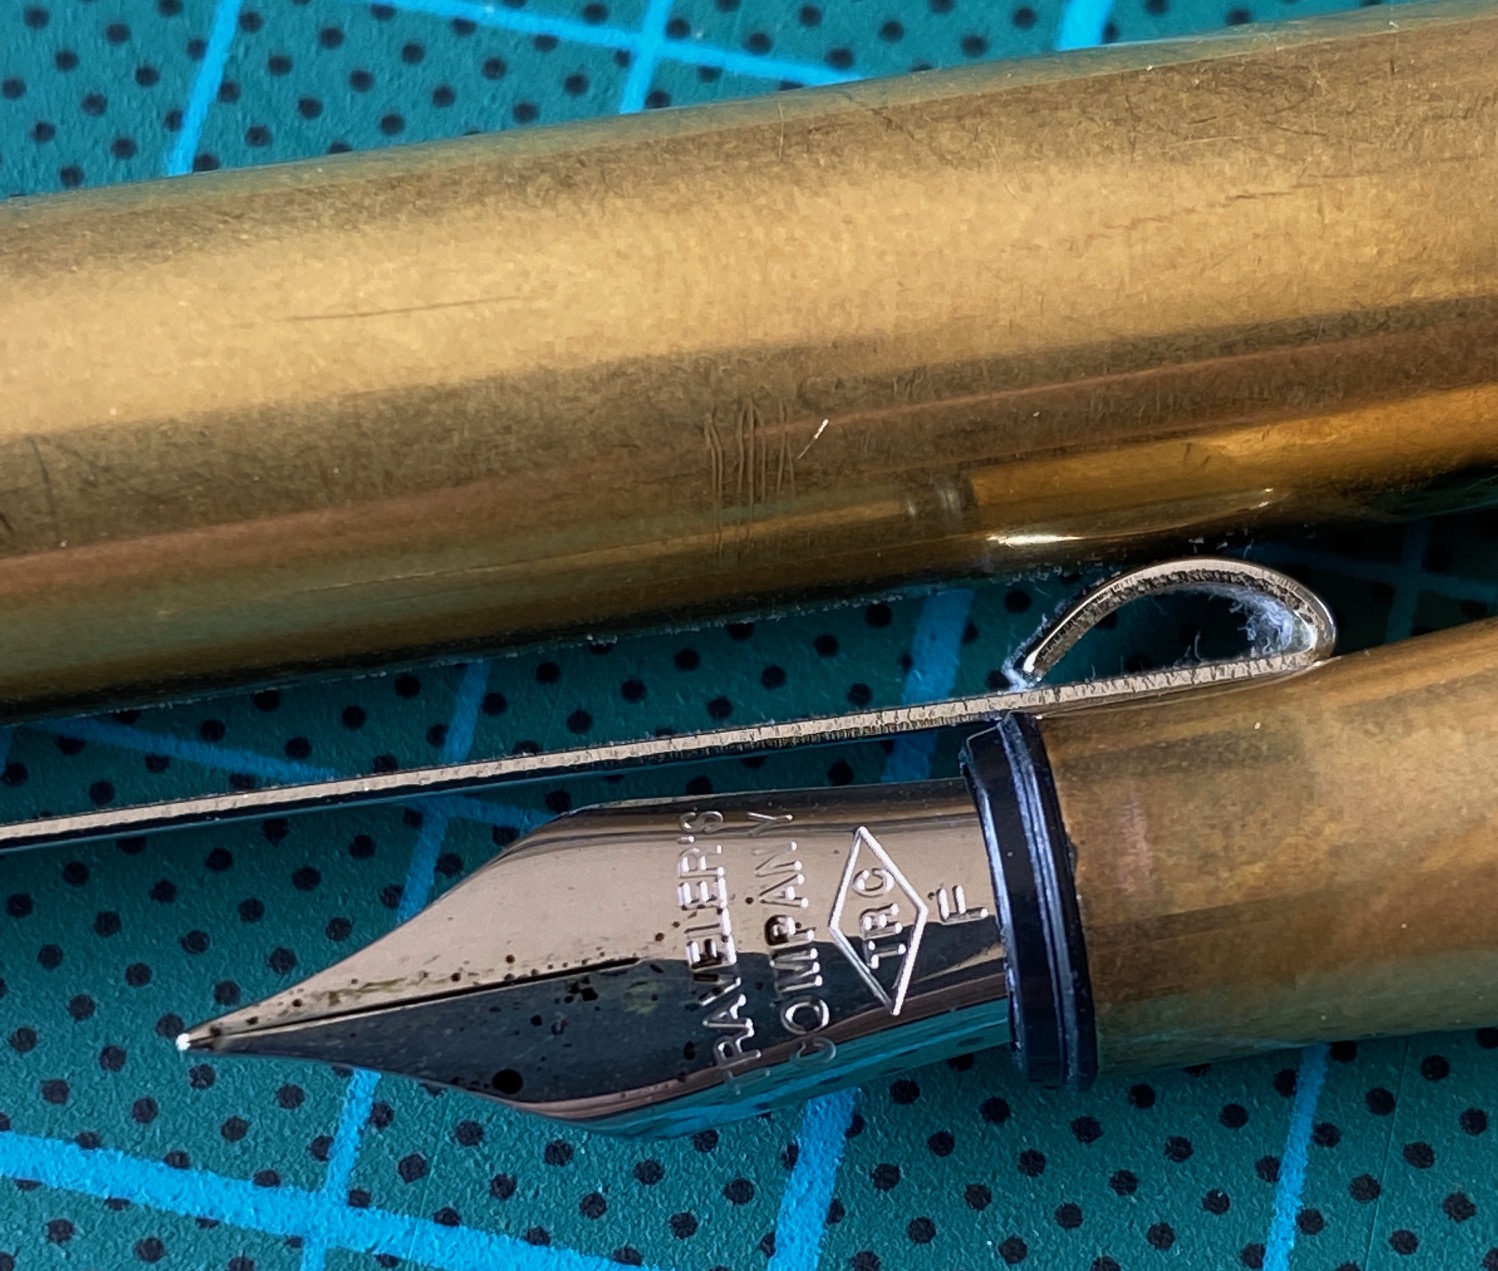 Traveler's Company Brass Fountain Pen Review — The Pen Addict